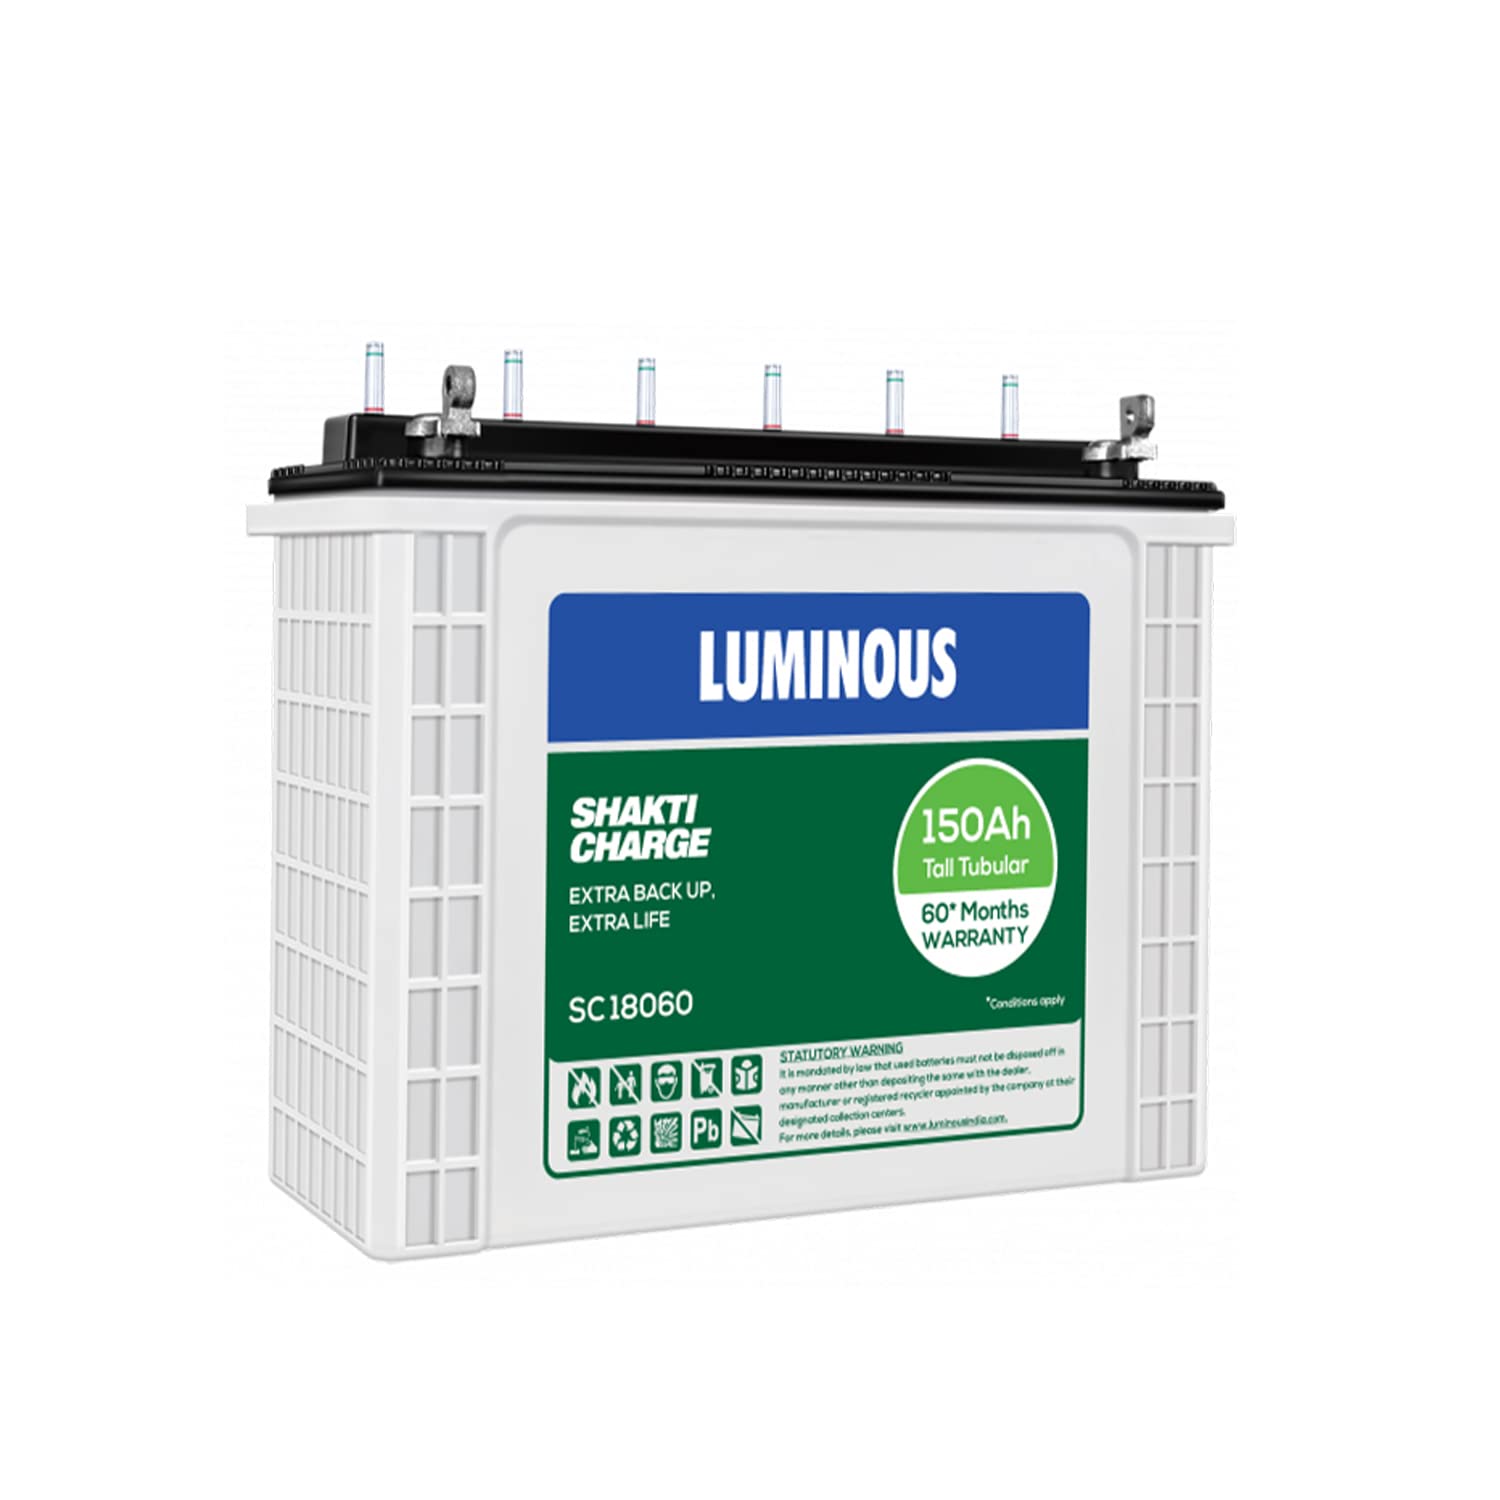 Luminous SC18060 150Ah Shakti Charge Tall Tubuar Battery 36+24 60*Month Warranty